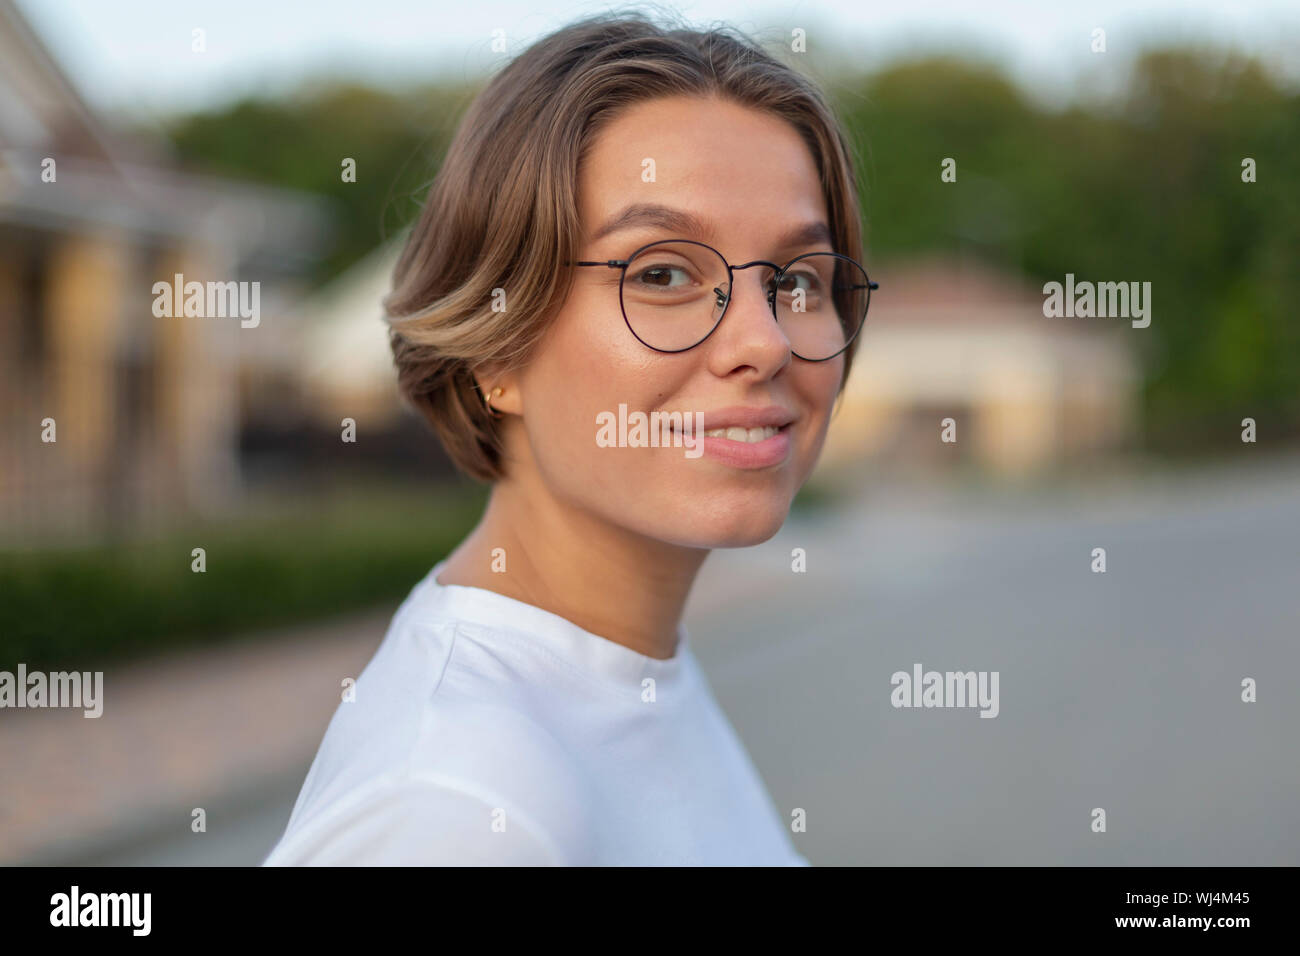 Portrait confident, smiling young woman Stock Photo